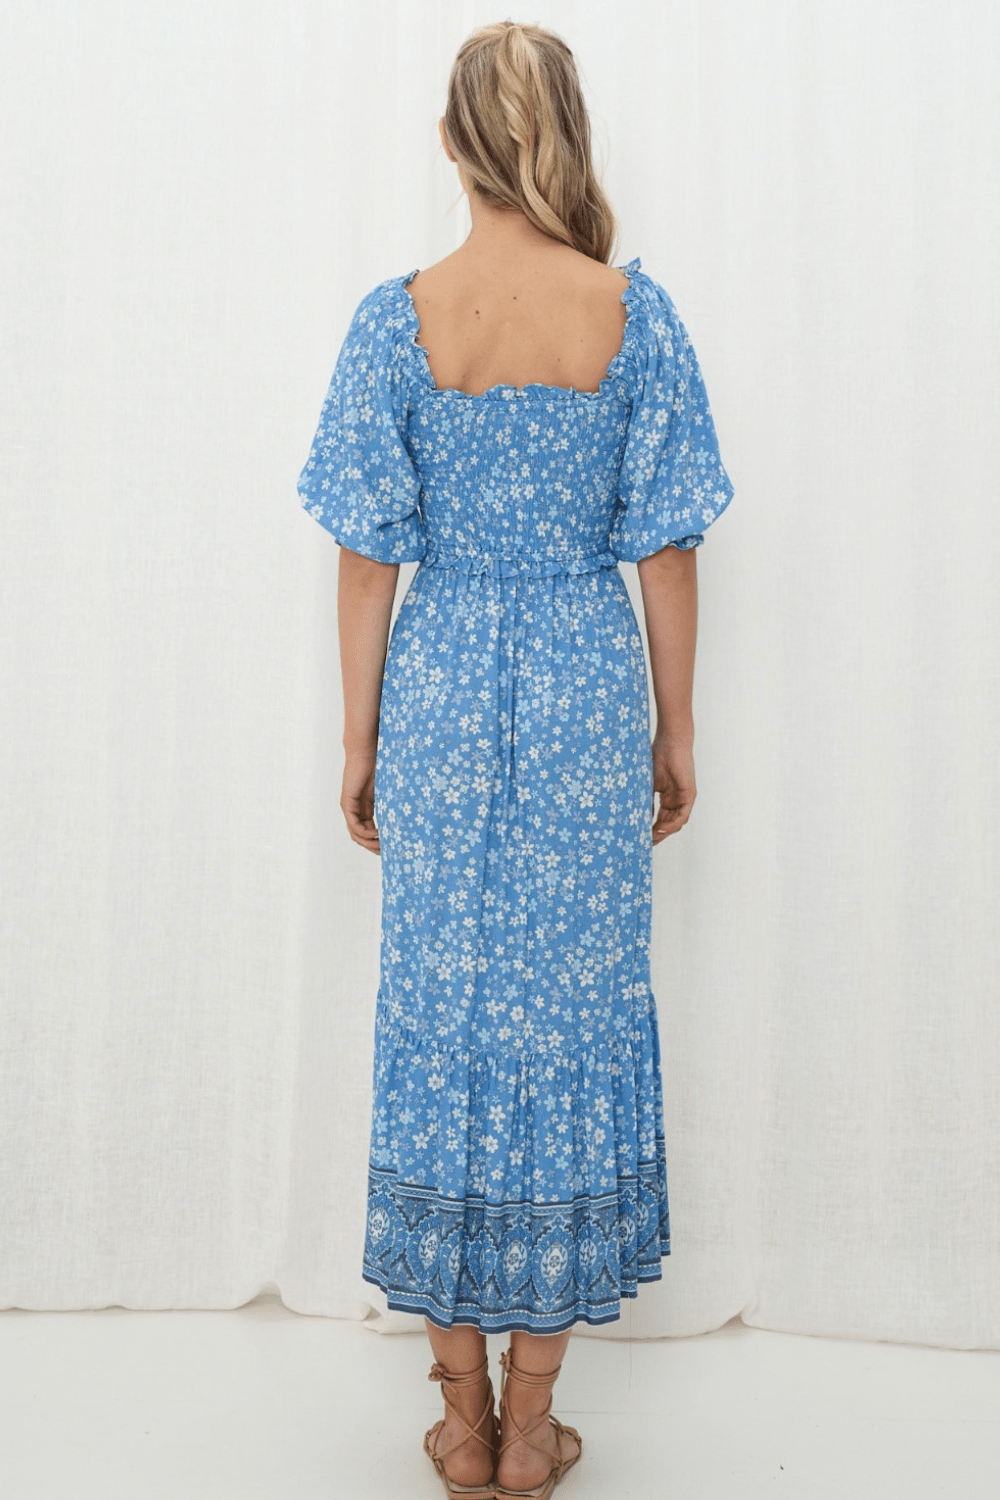 Summer Sky Midi Dress - Blue Floral